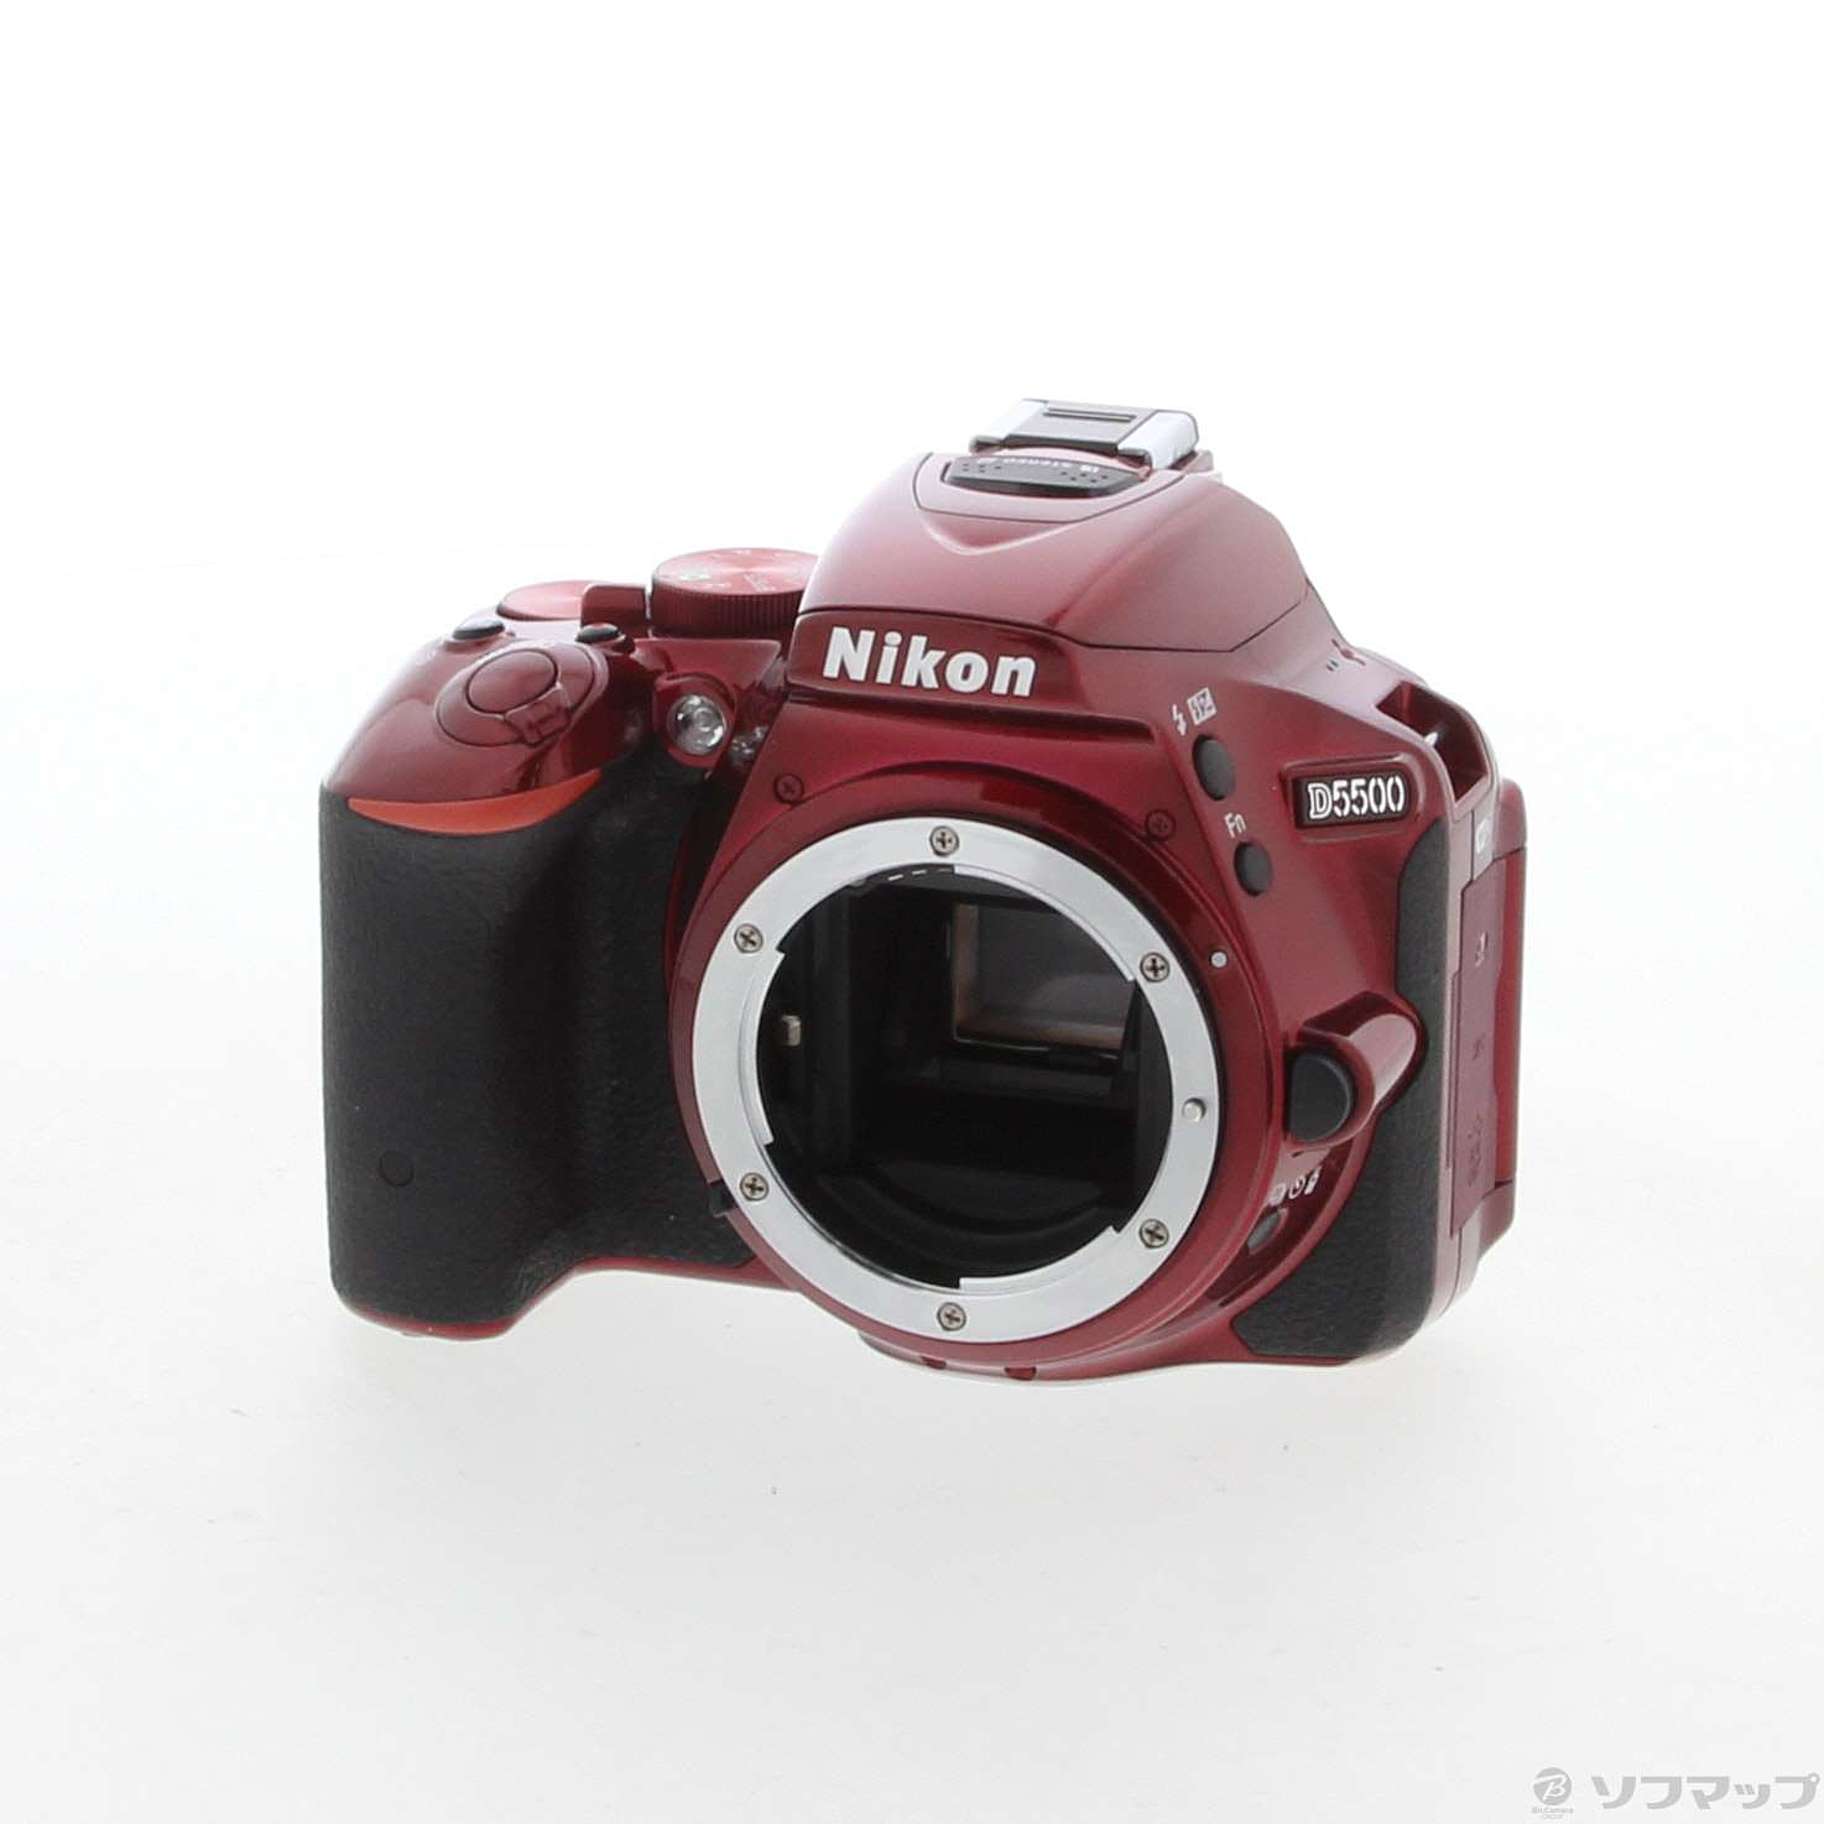 Nikon D5500 本体 | www.150.illinois.edu